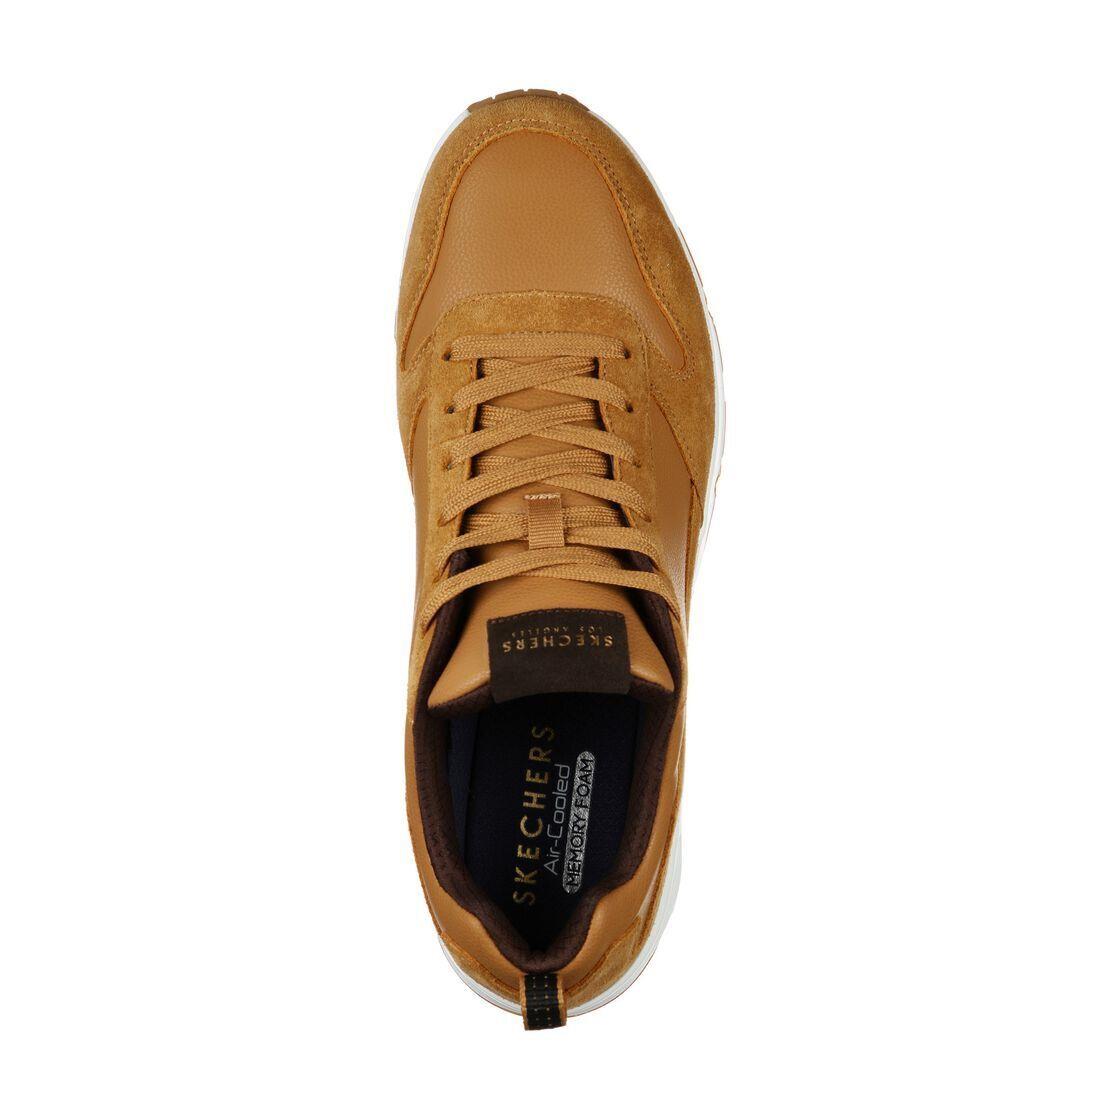 Skechers shoes Uno Stacre 5